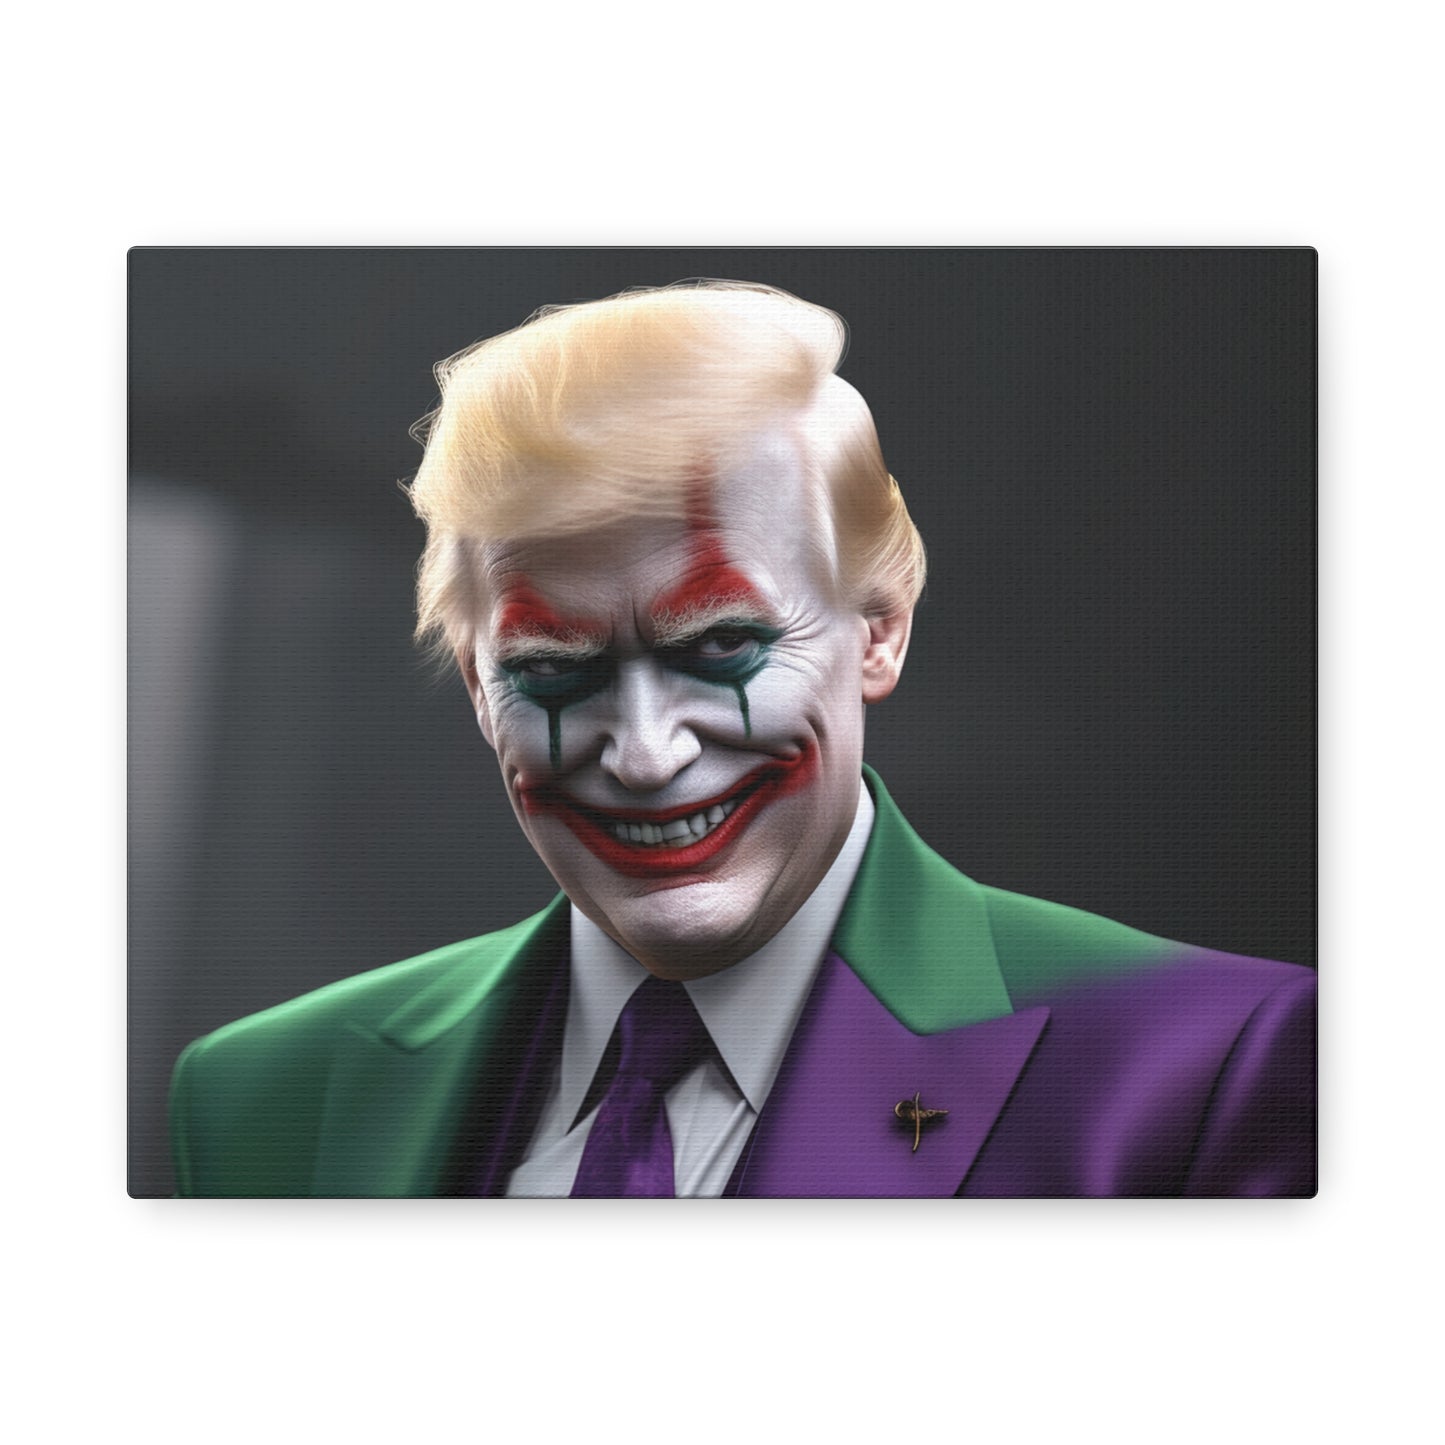 Wildcard: The Clown Prince of Politics